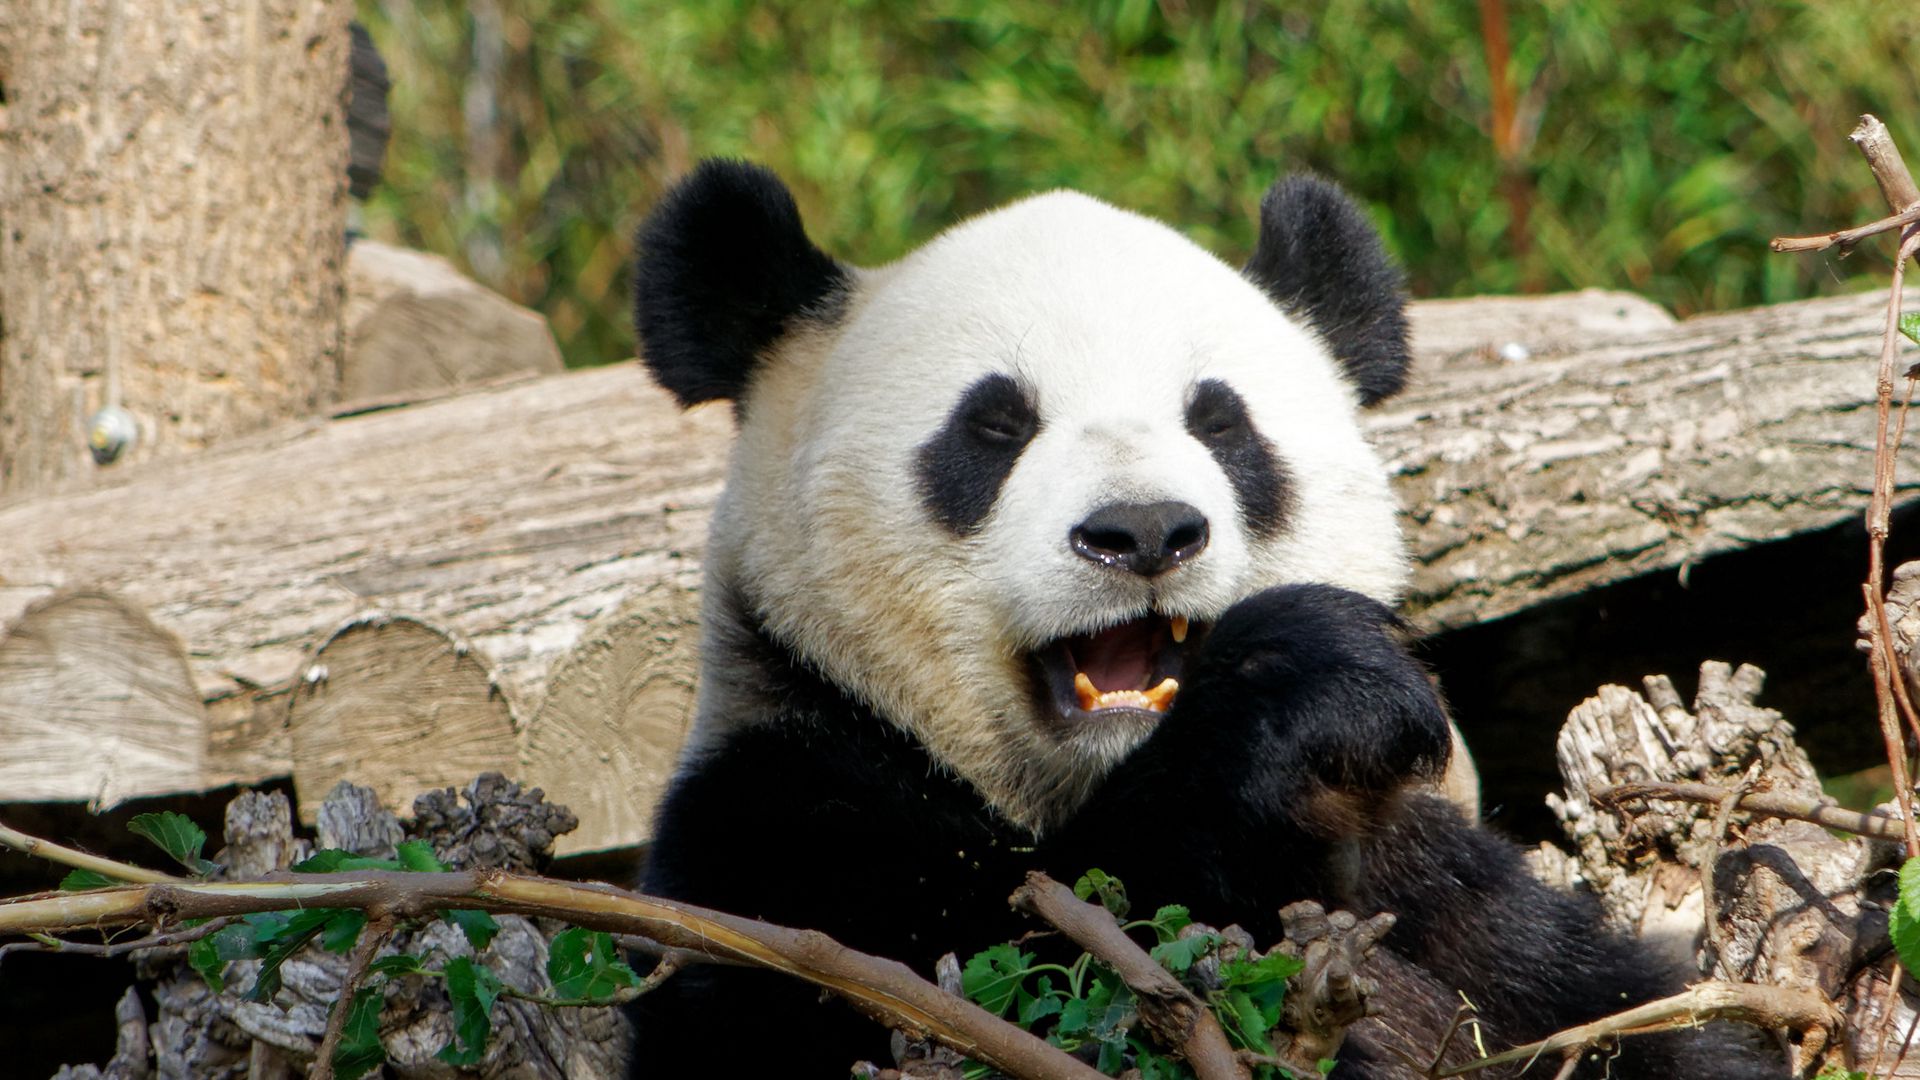 Download wallpaper 1920x1080 panda, bear, funny, animal full hd, hdtv, fhd,  1080p hd background